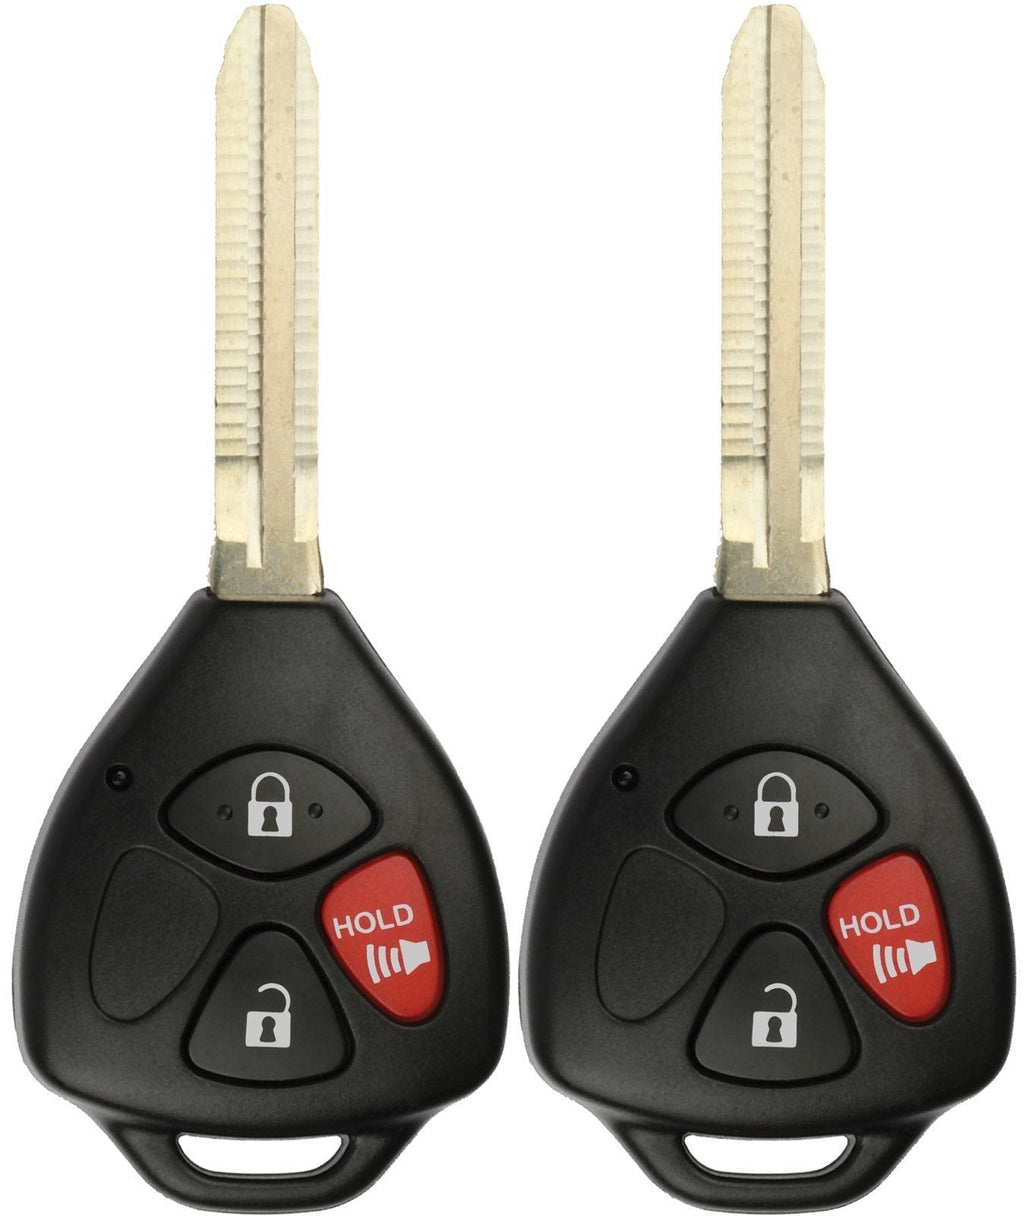  [AUSTRALIA] - KeylessOption Keyless Entry Remote Control Car Key Fob Replacement for MOZB41TG (Pack of 2)